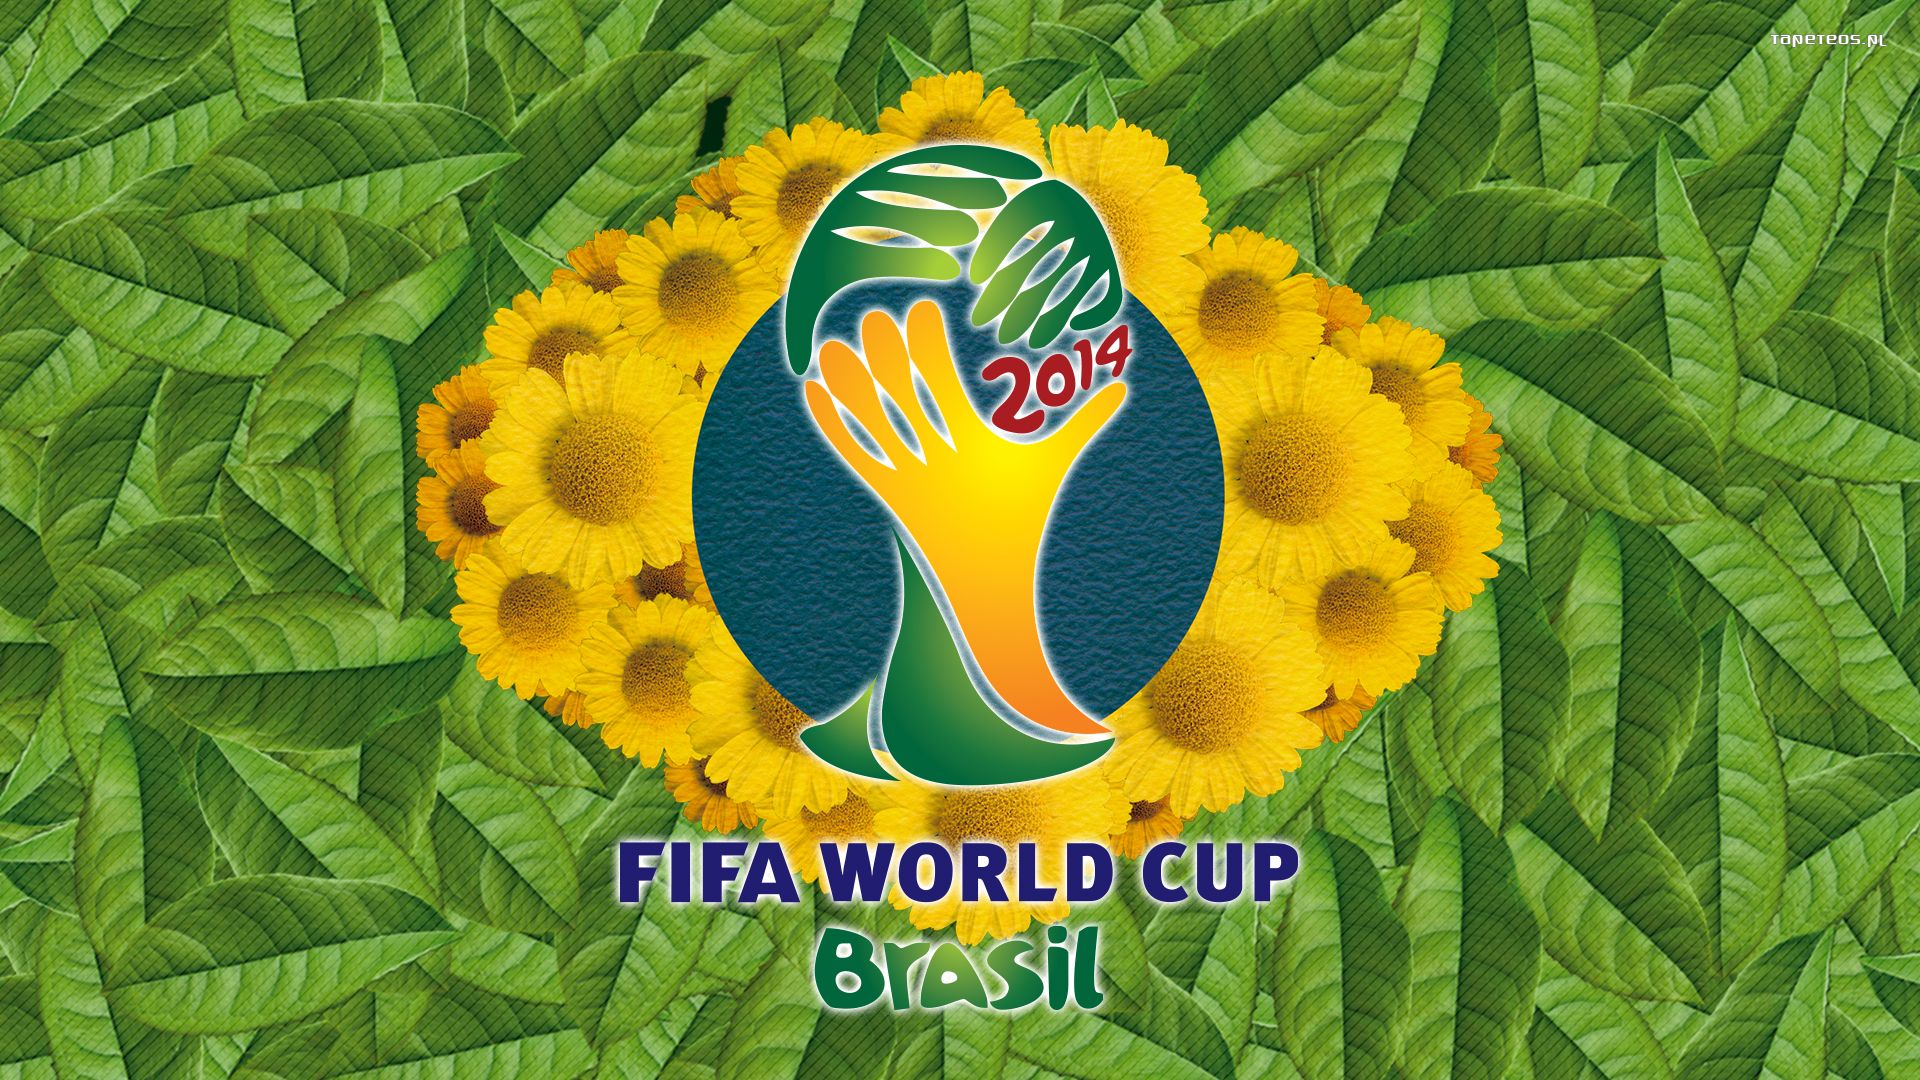 Fifa World Cup Brazil 2014 011